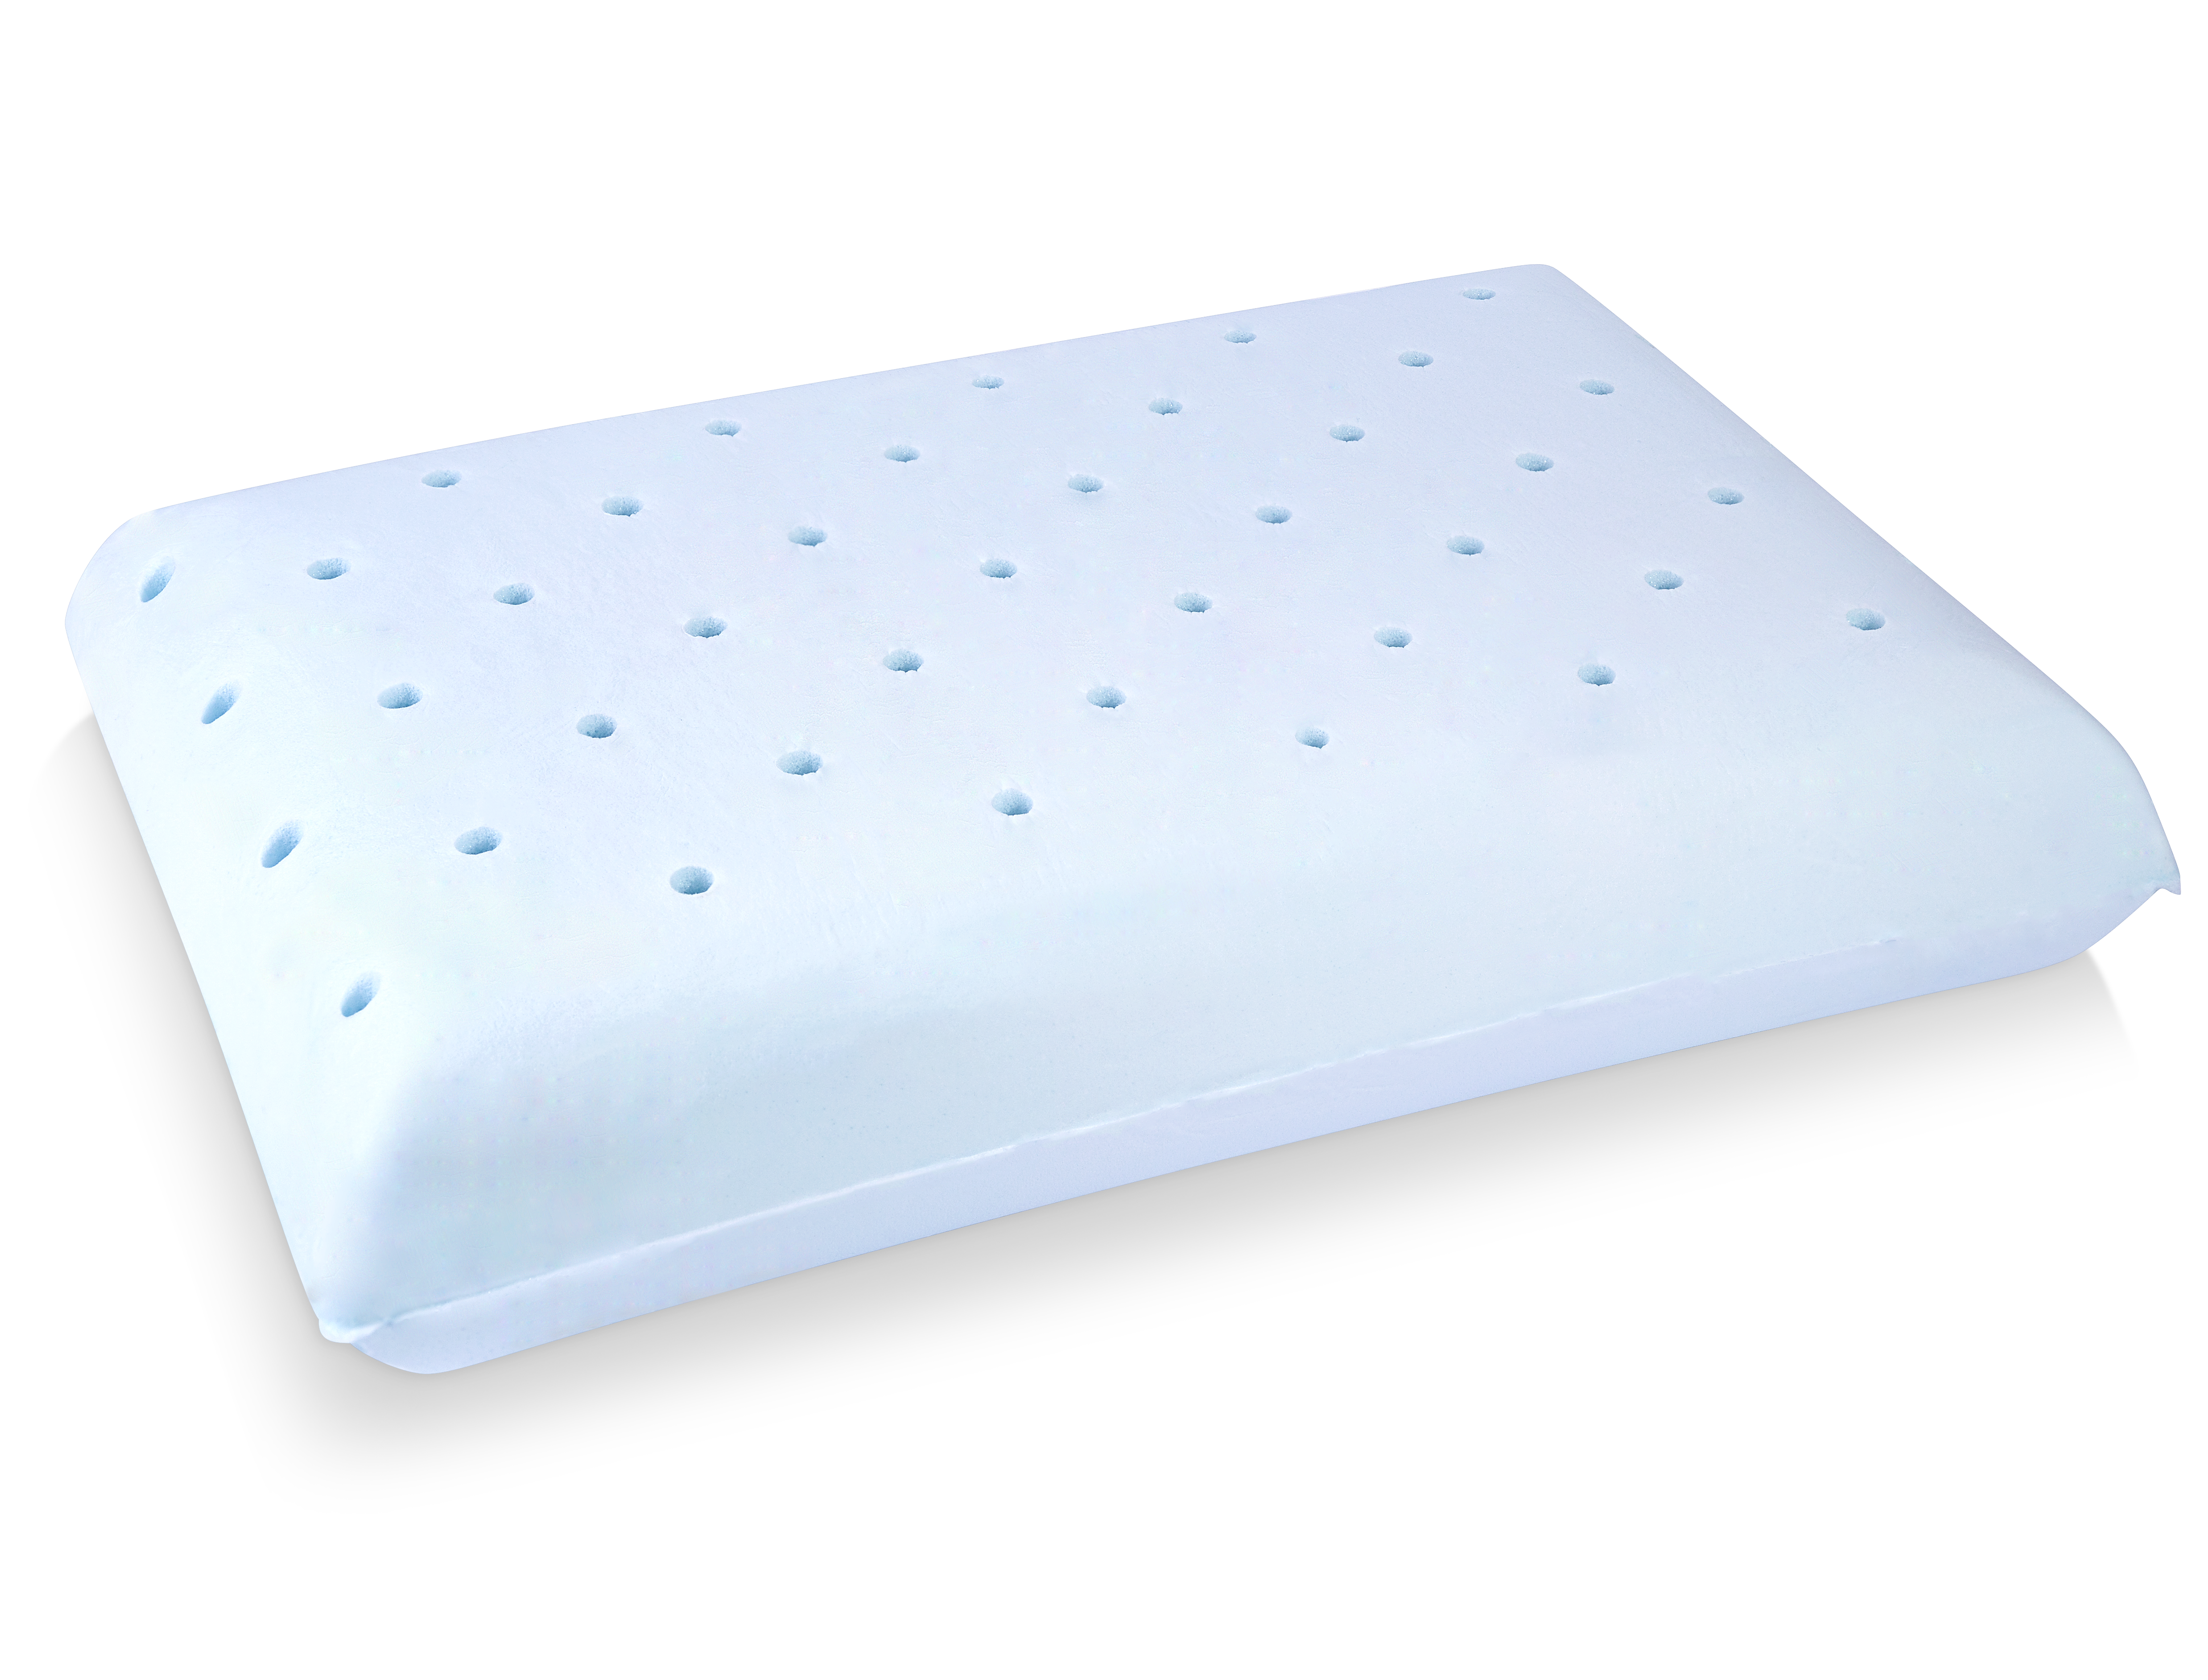 Mediflow Water Pillow - Elite Cooling Memory Foam